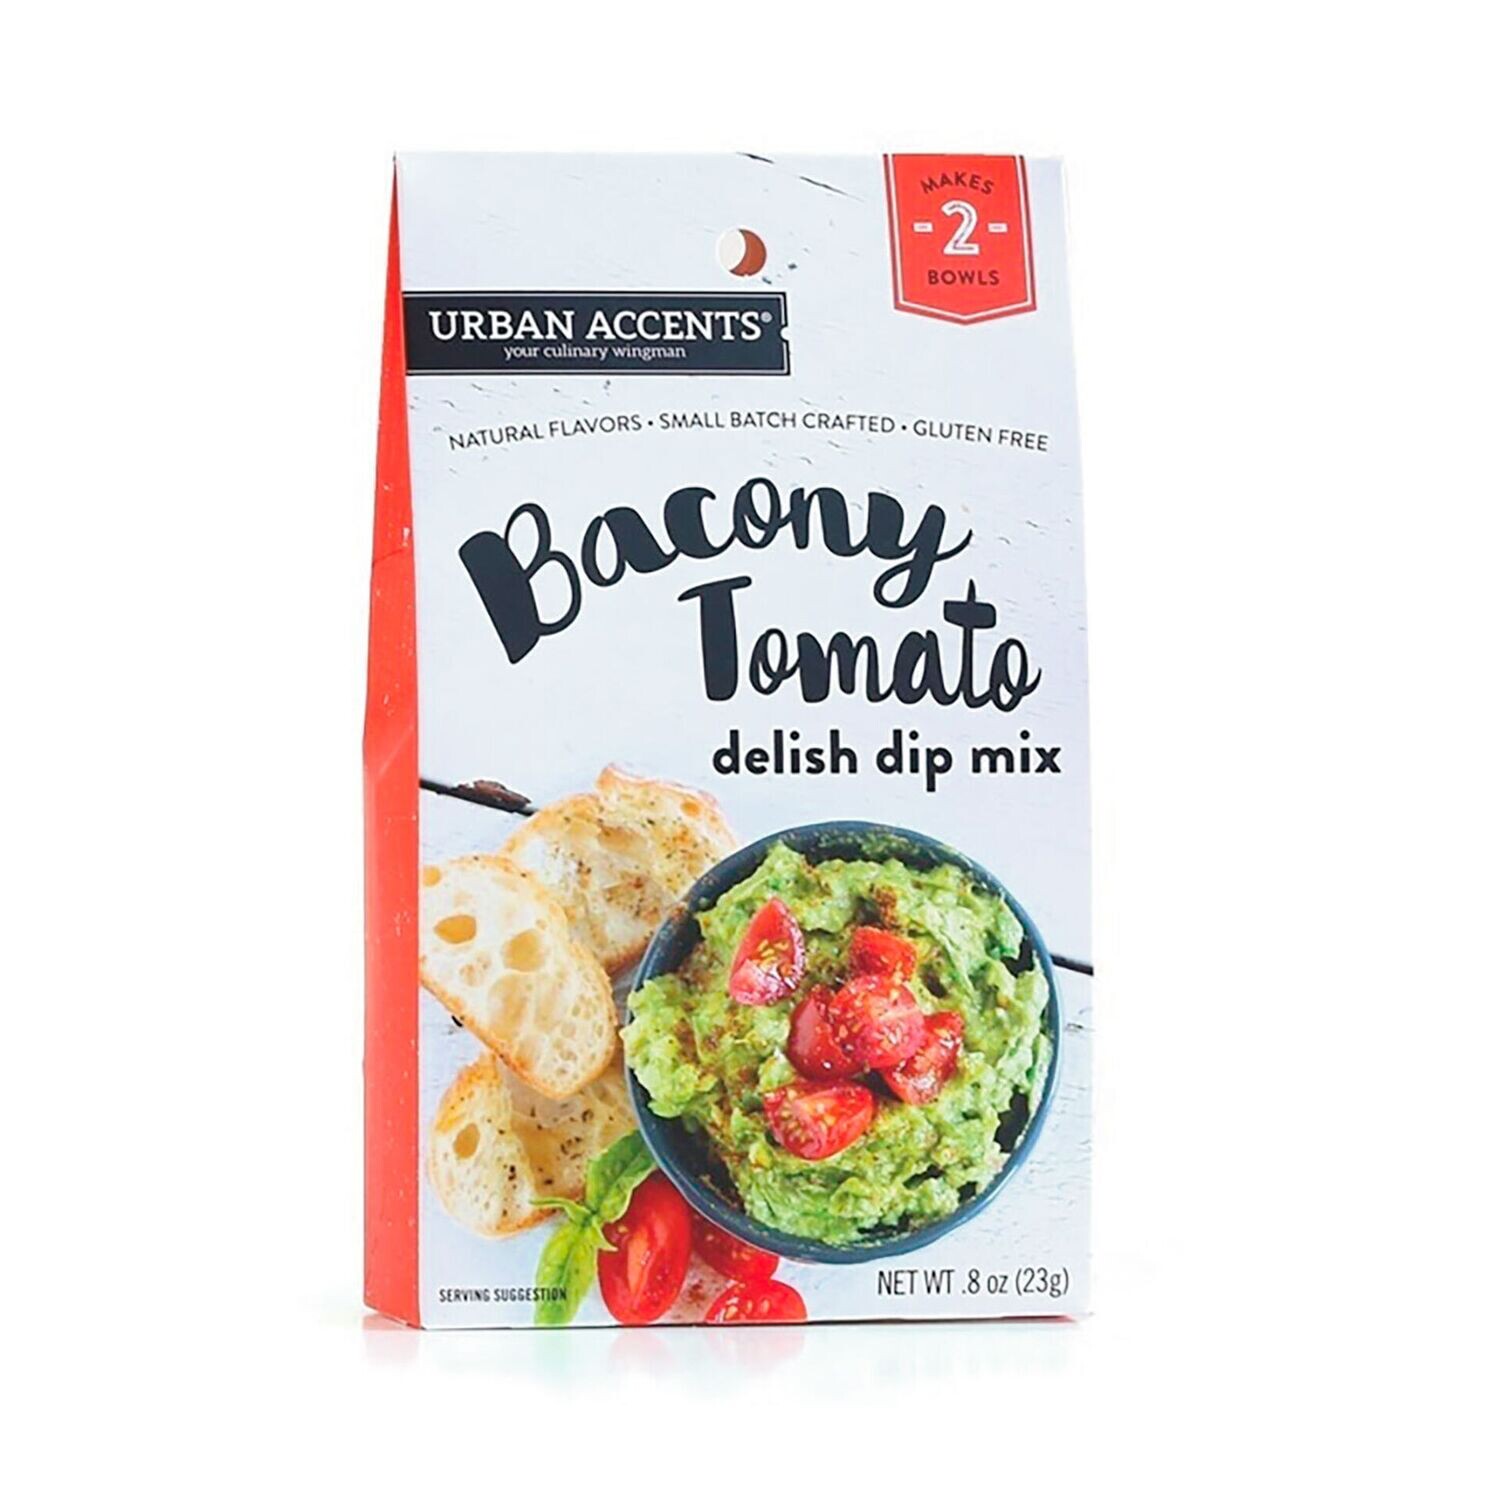 Urban Accents Bacony Tomato Delish Dip Mix